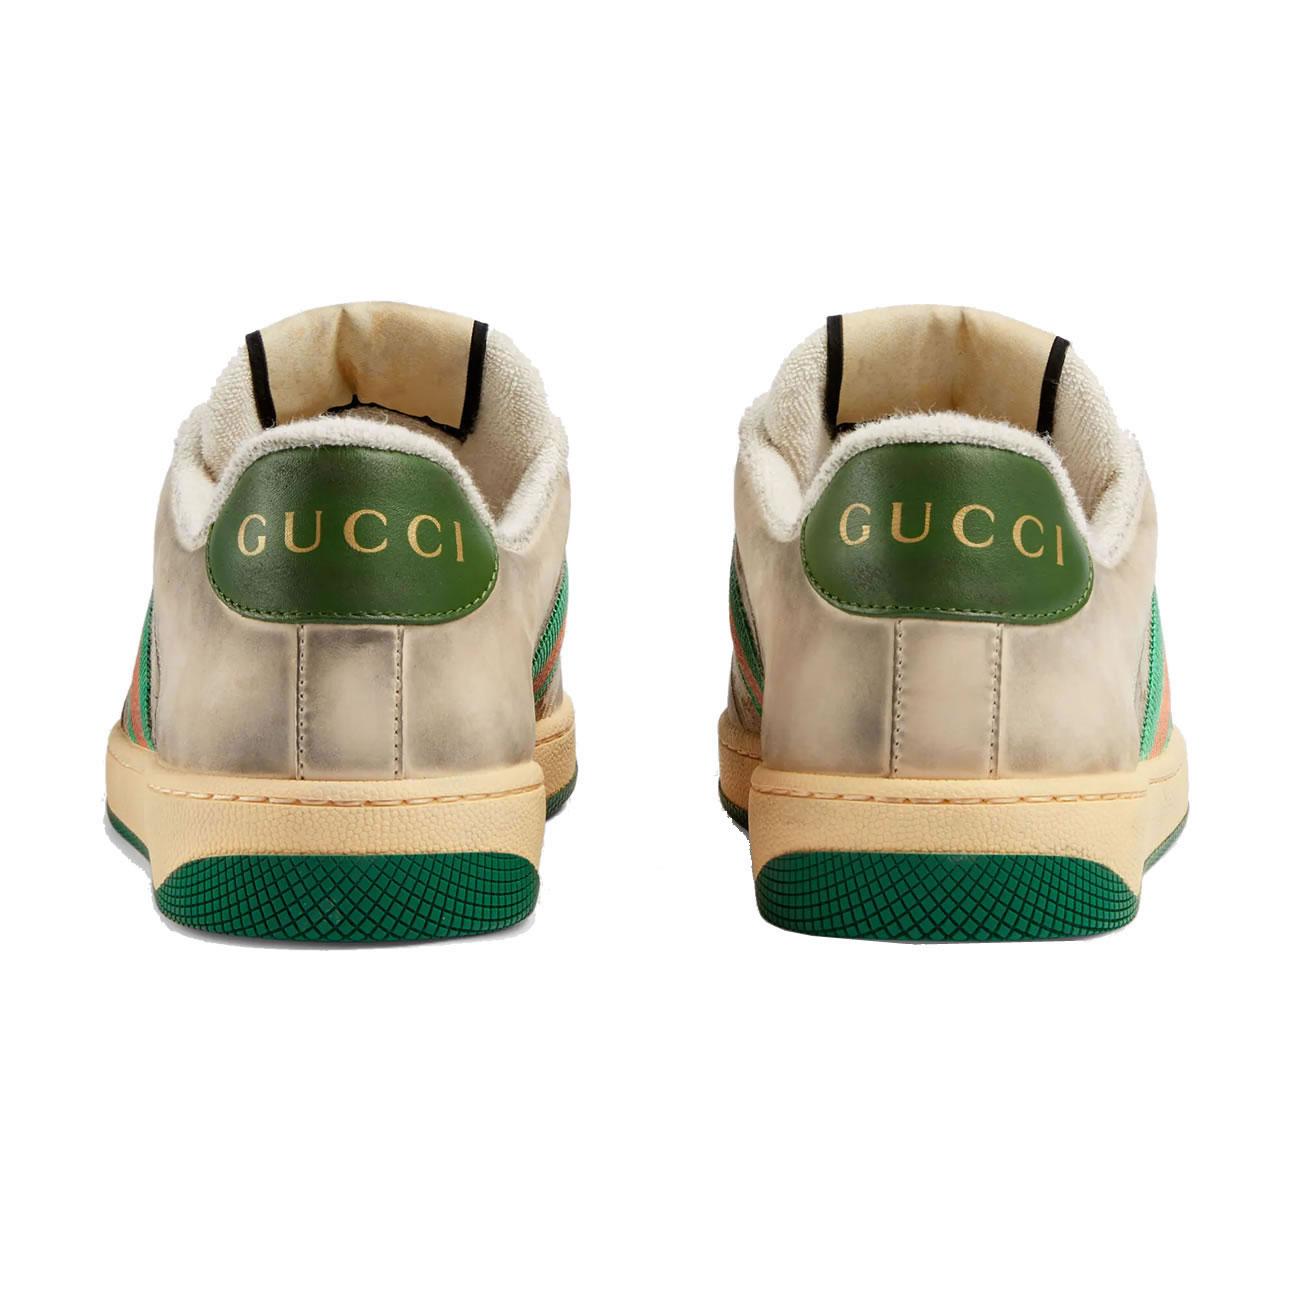 G U C C I Shoes Sneakers 4 Colors (33) - newkick.org